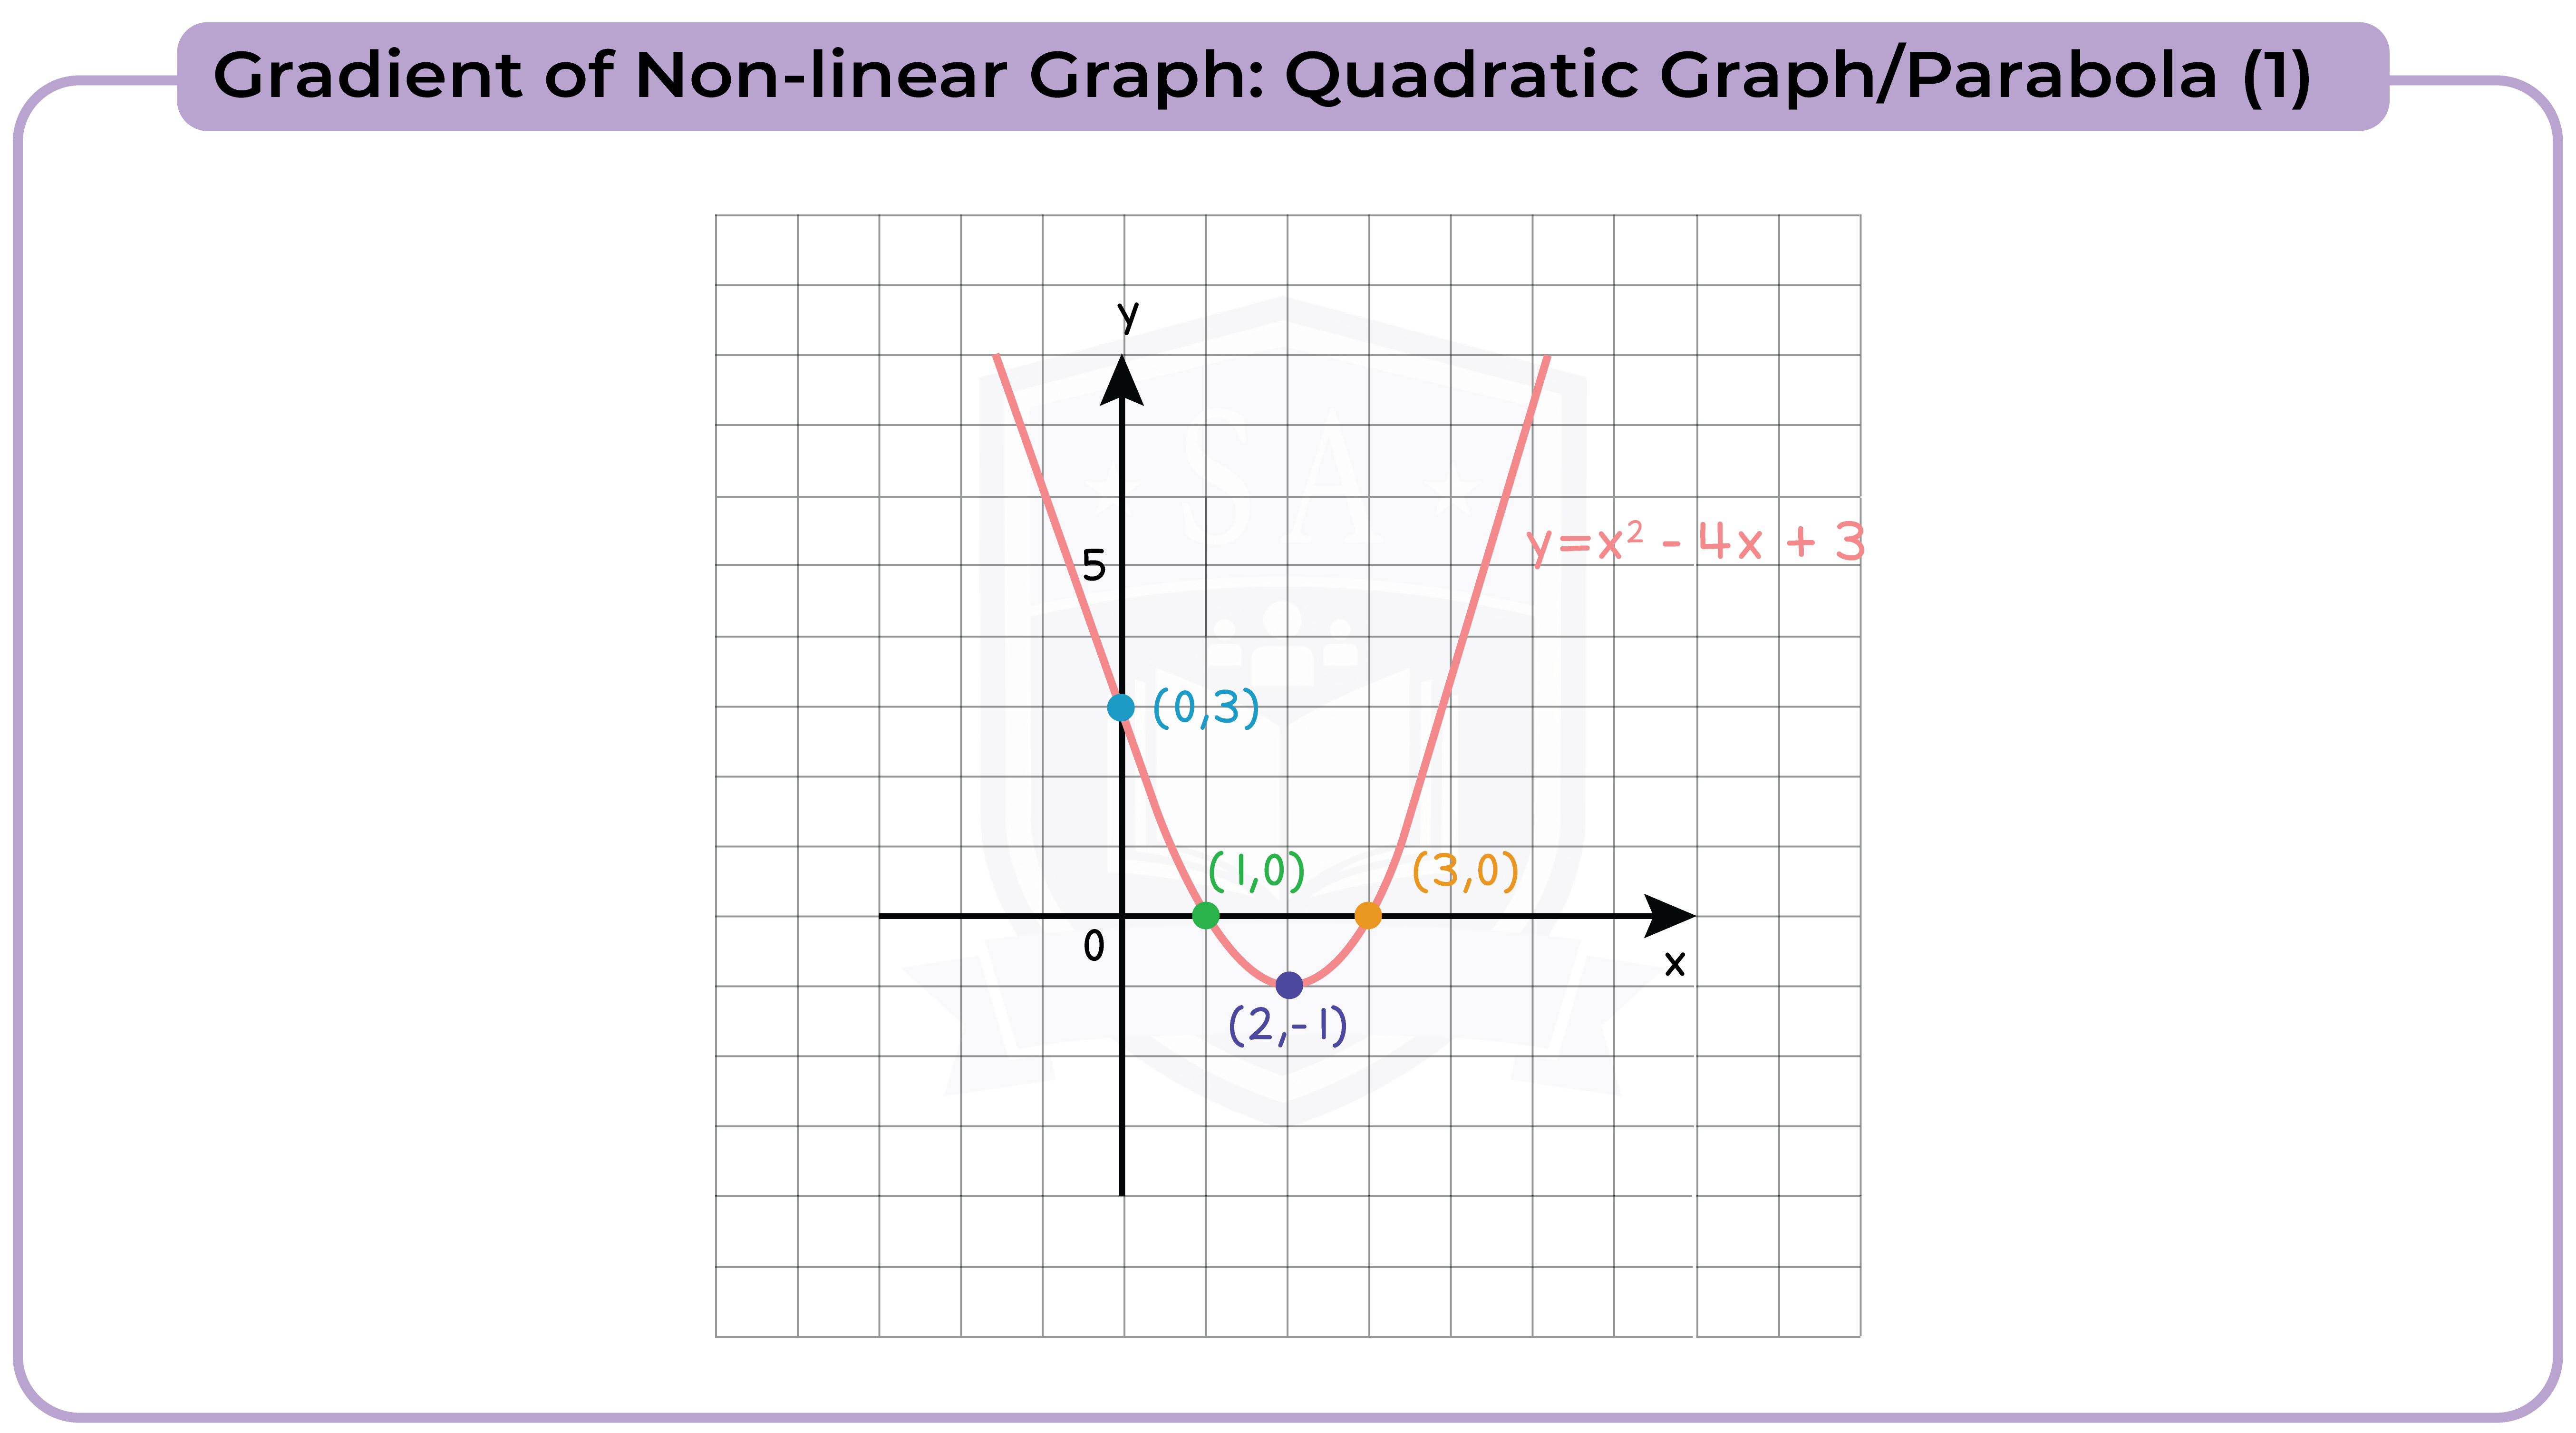 edexcel_igcse_mathematics a_topic 23_graphs_023_Gradient of Non-linear Graph: Quadratic Graph/Parabola (1)